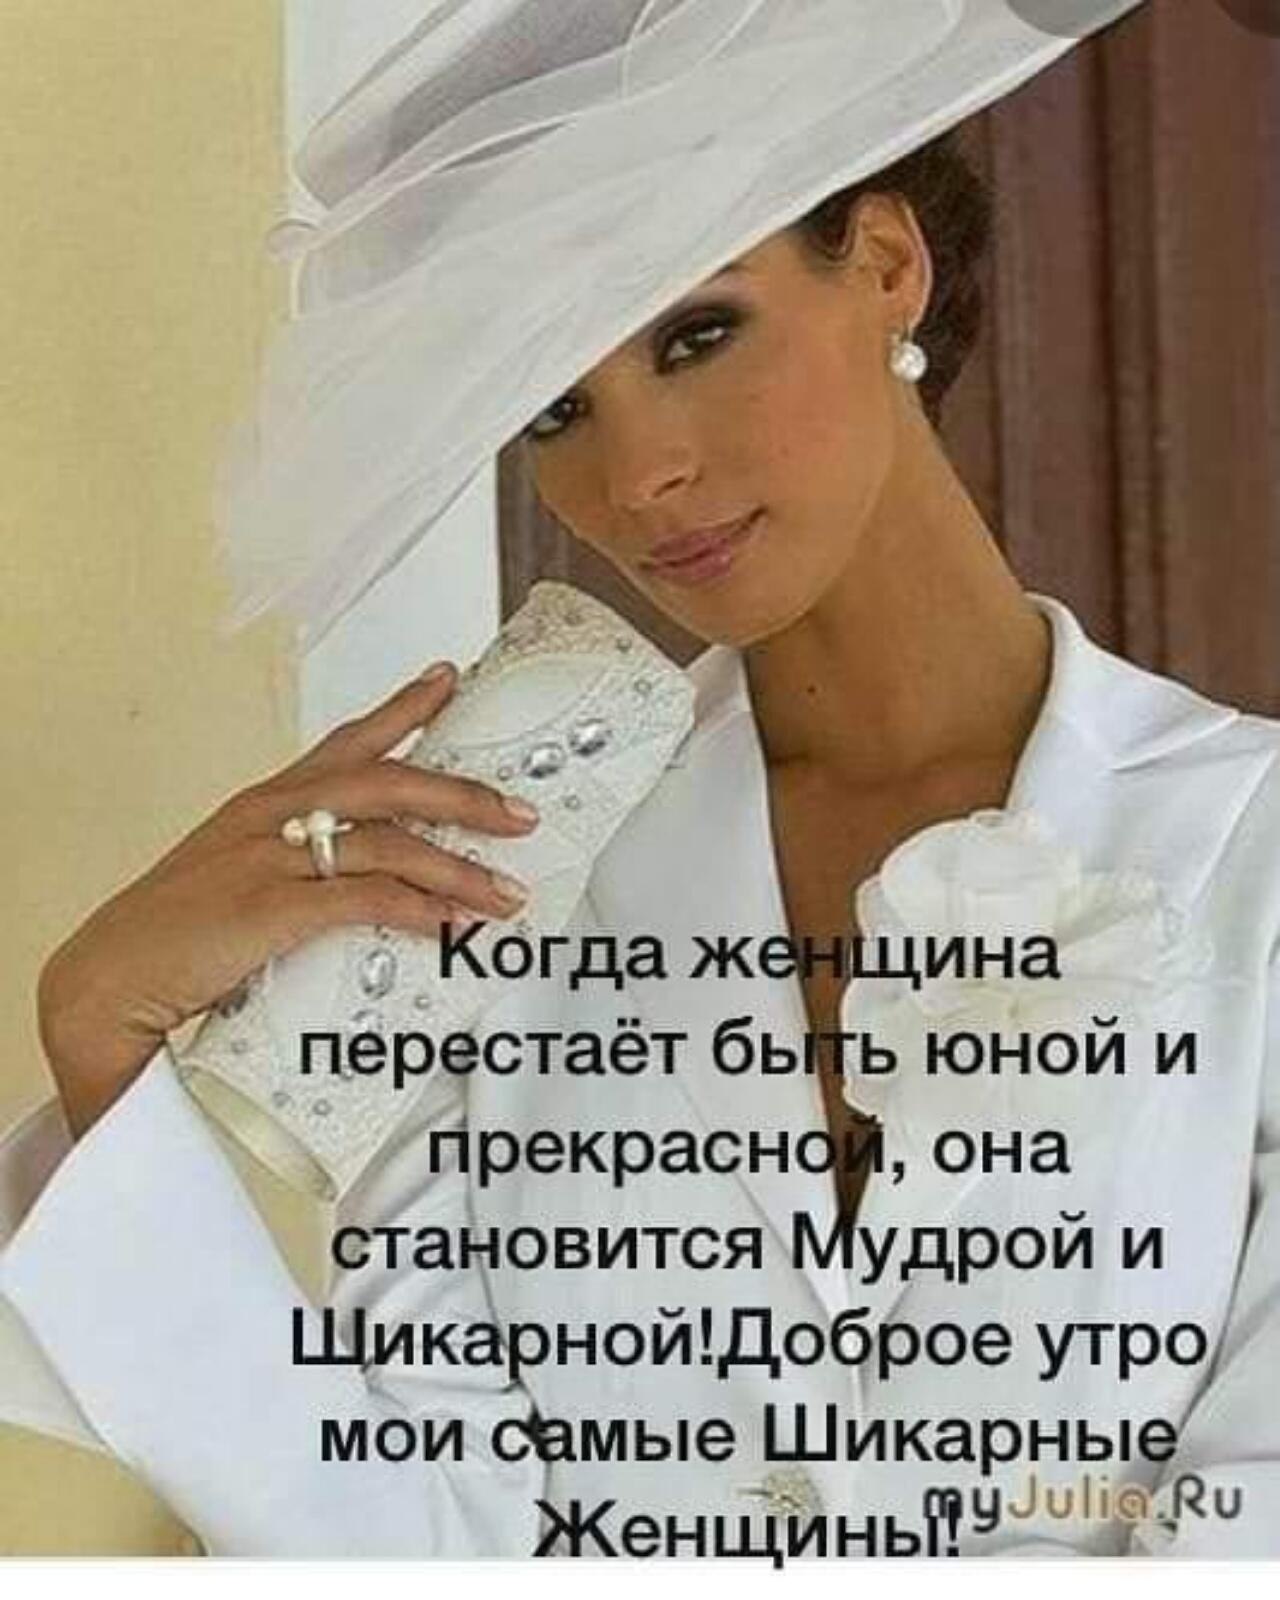 ***Victoria Viktorovna*** - 17  2021  10:57